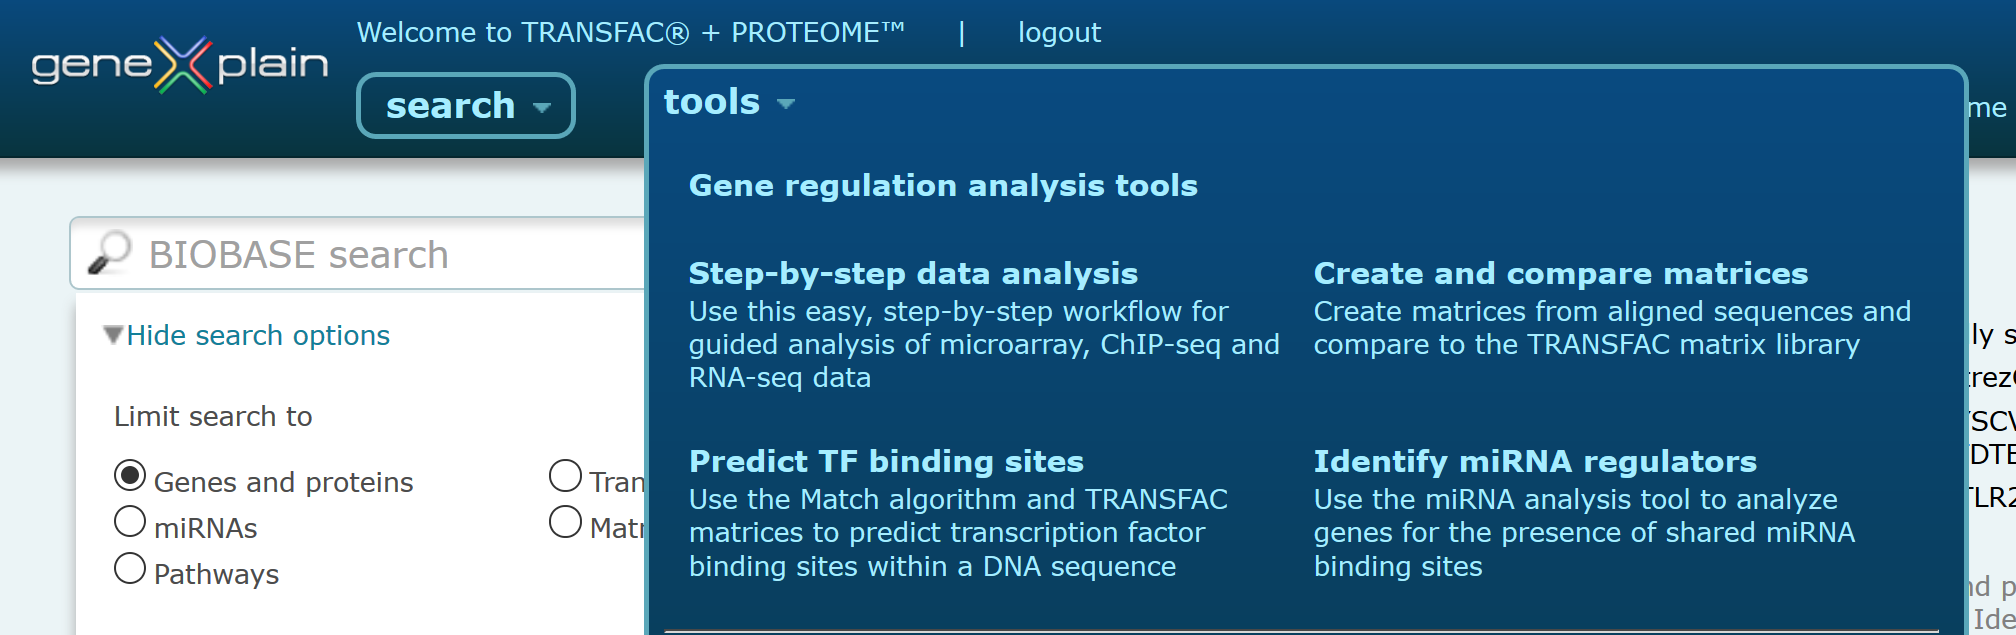 Gene Regulation Analysis Tool Menu